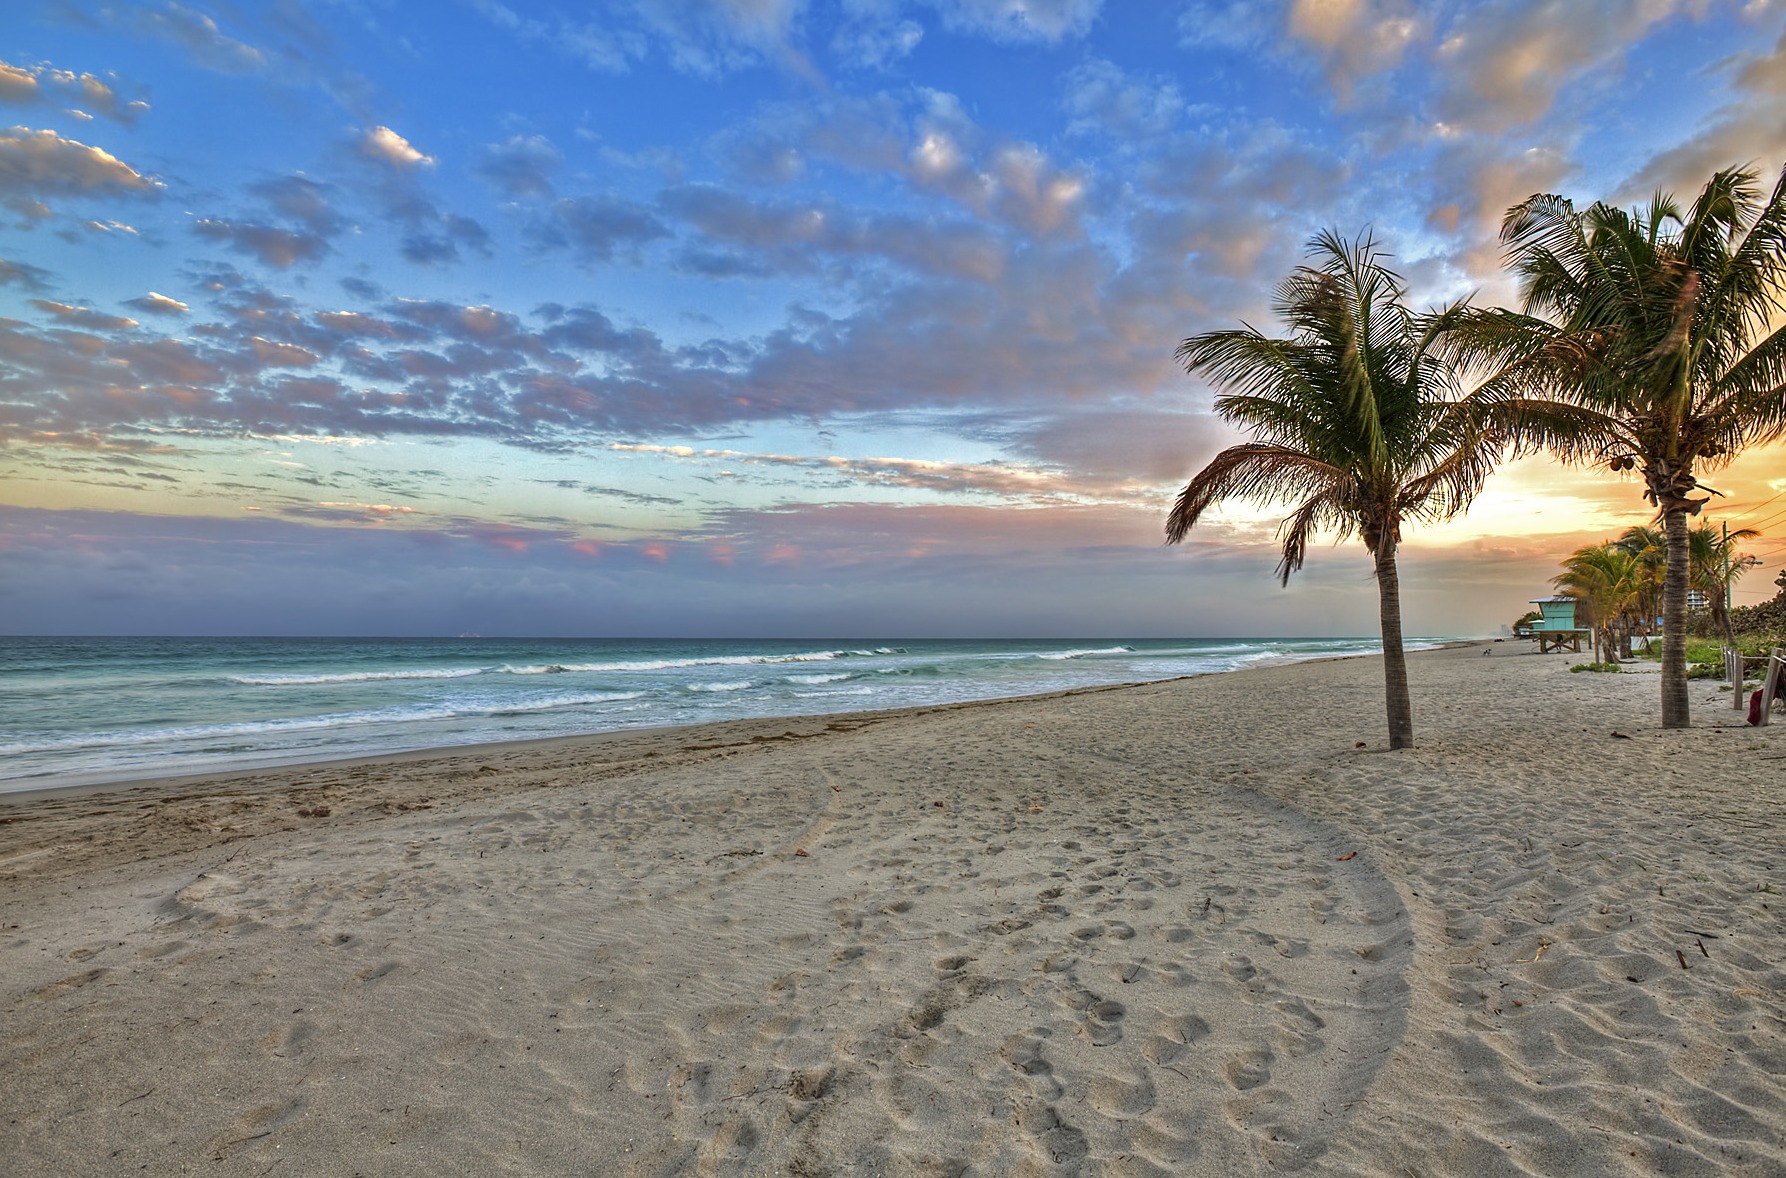 Photograph of a serene beach with an ocean view